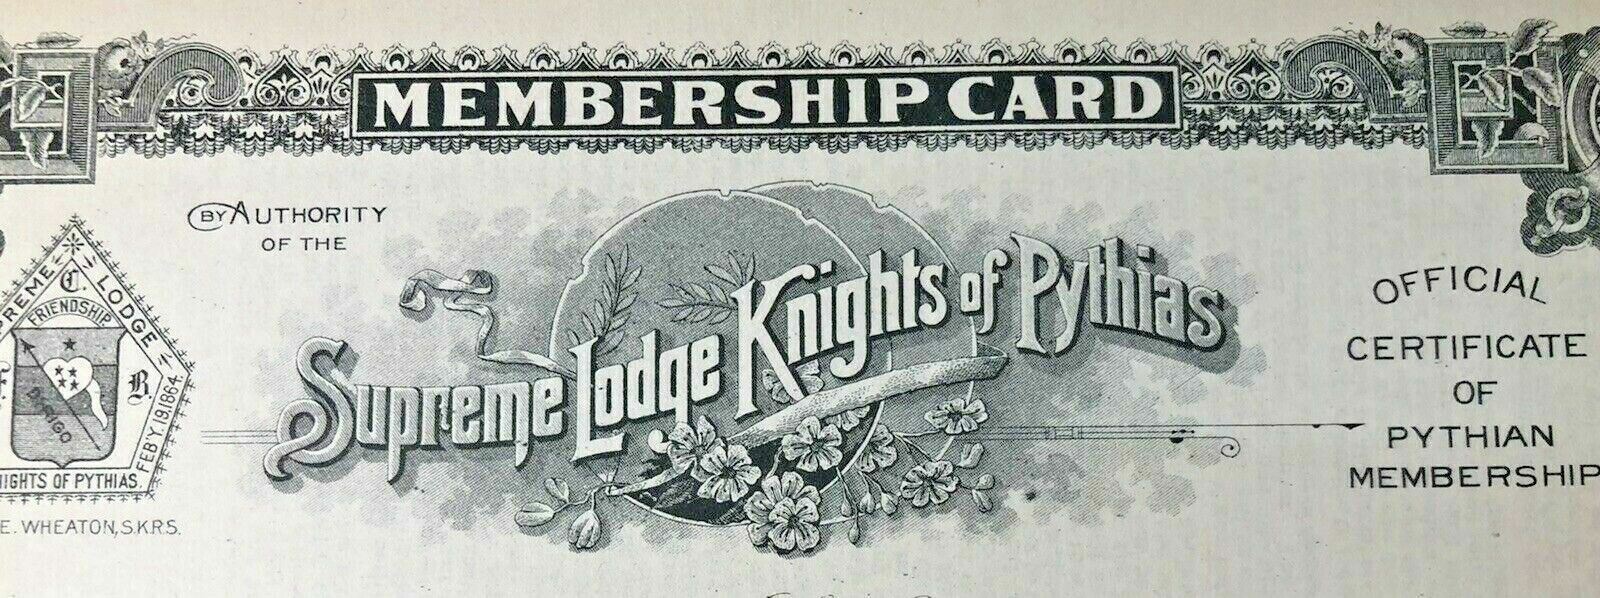 Supreme Lodge Knights of Pythias Ca. 1920 Membership Card BLANK UNUSED MINT Без бренда - фотография #2